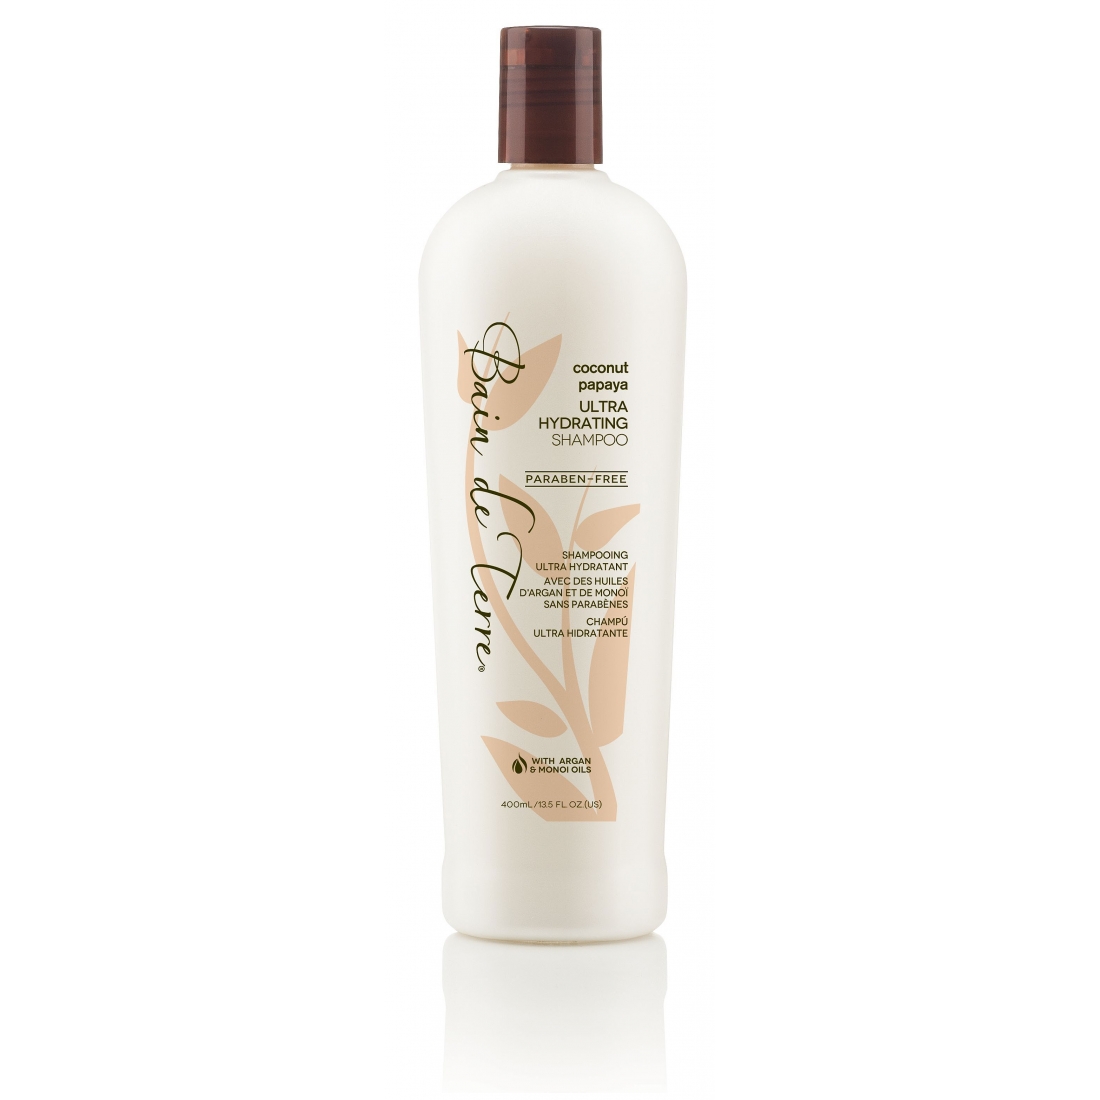 'Ultra moisturizing' Shampoo - 400 ml